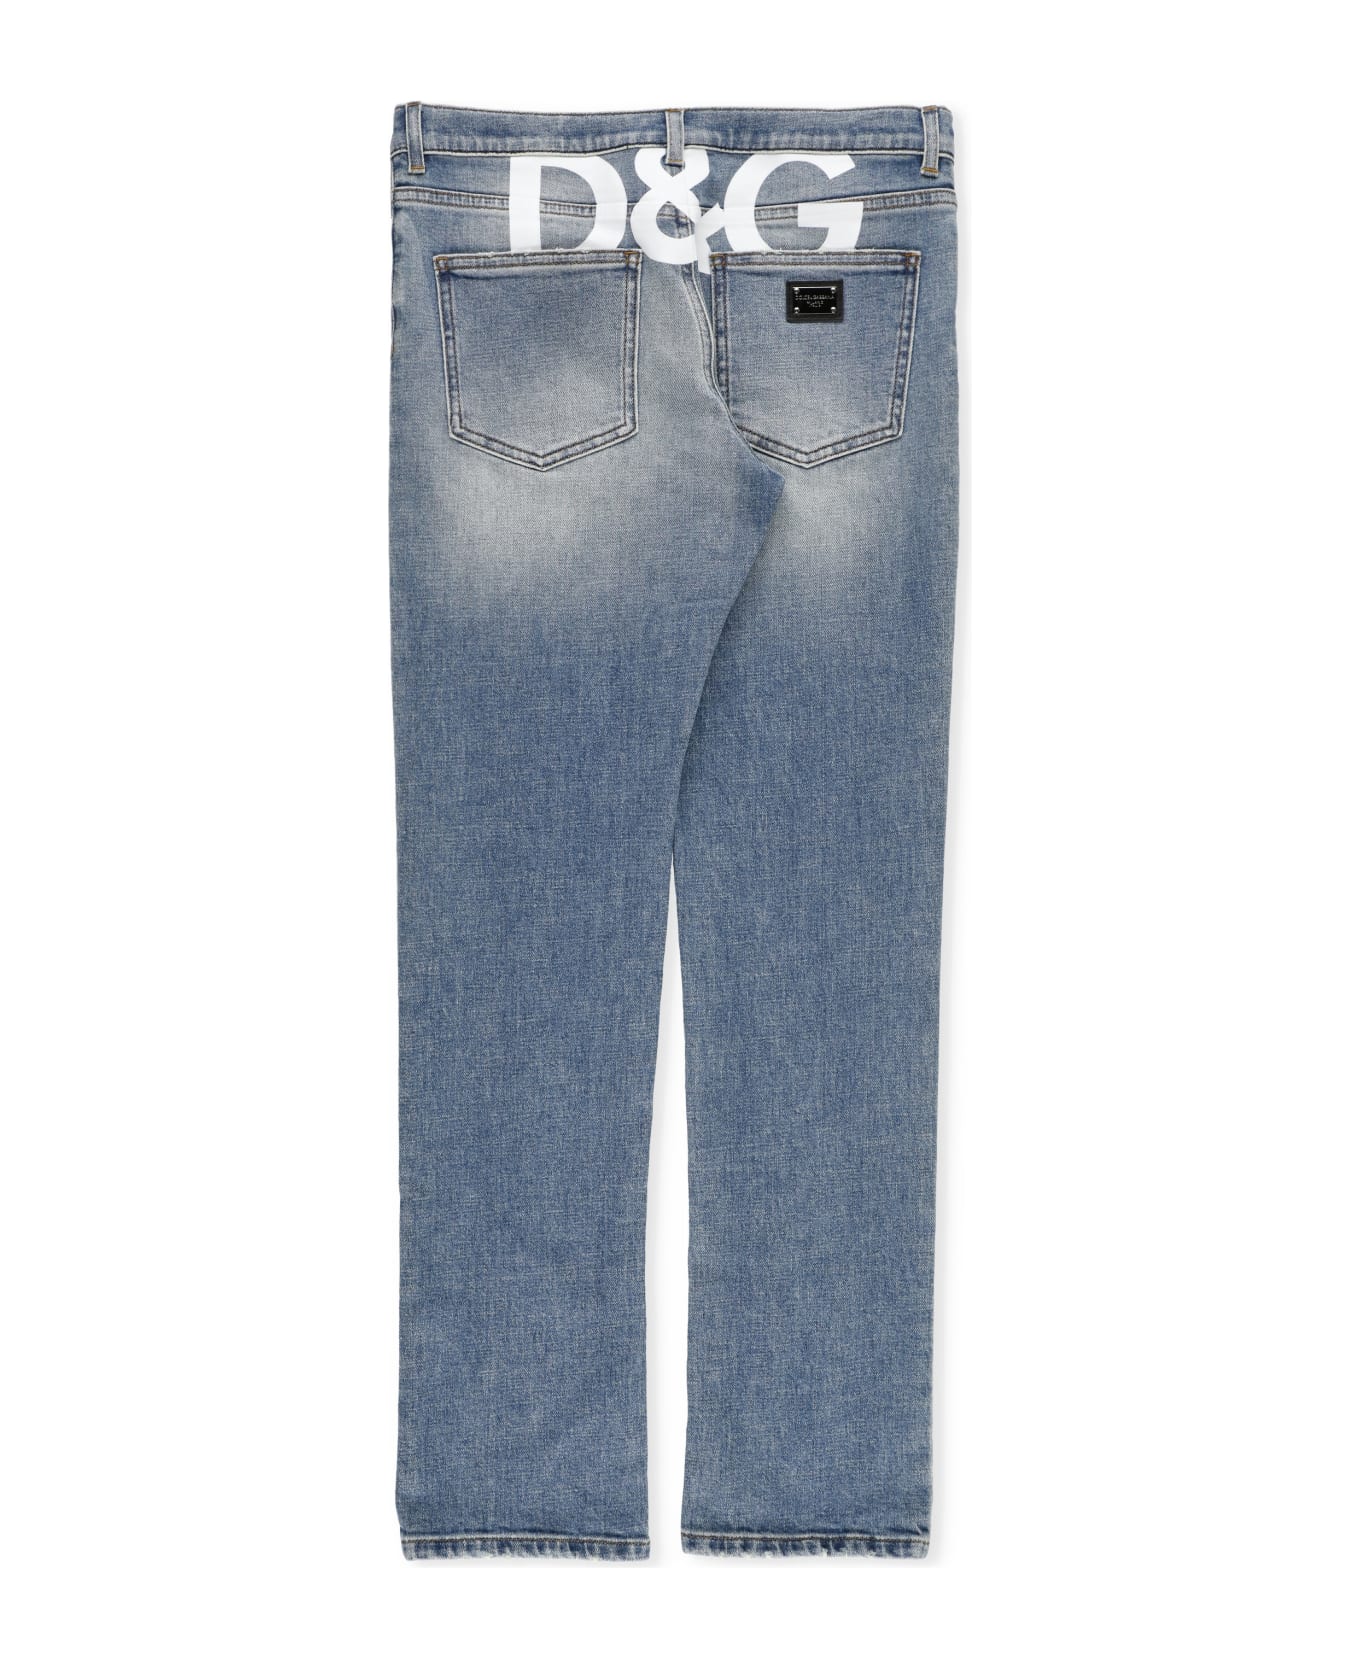 Dolce & Gabbana Logoed Jeans - Light Blue ボトムス